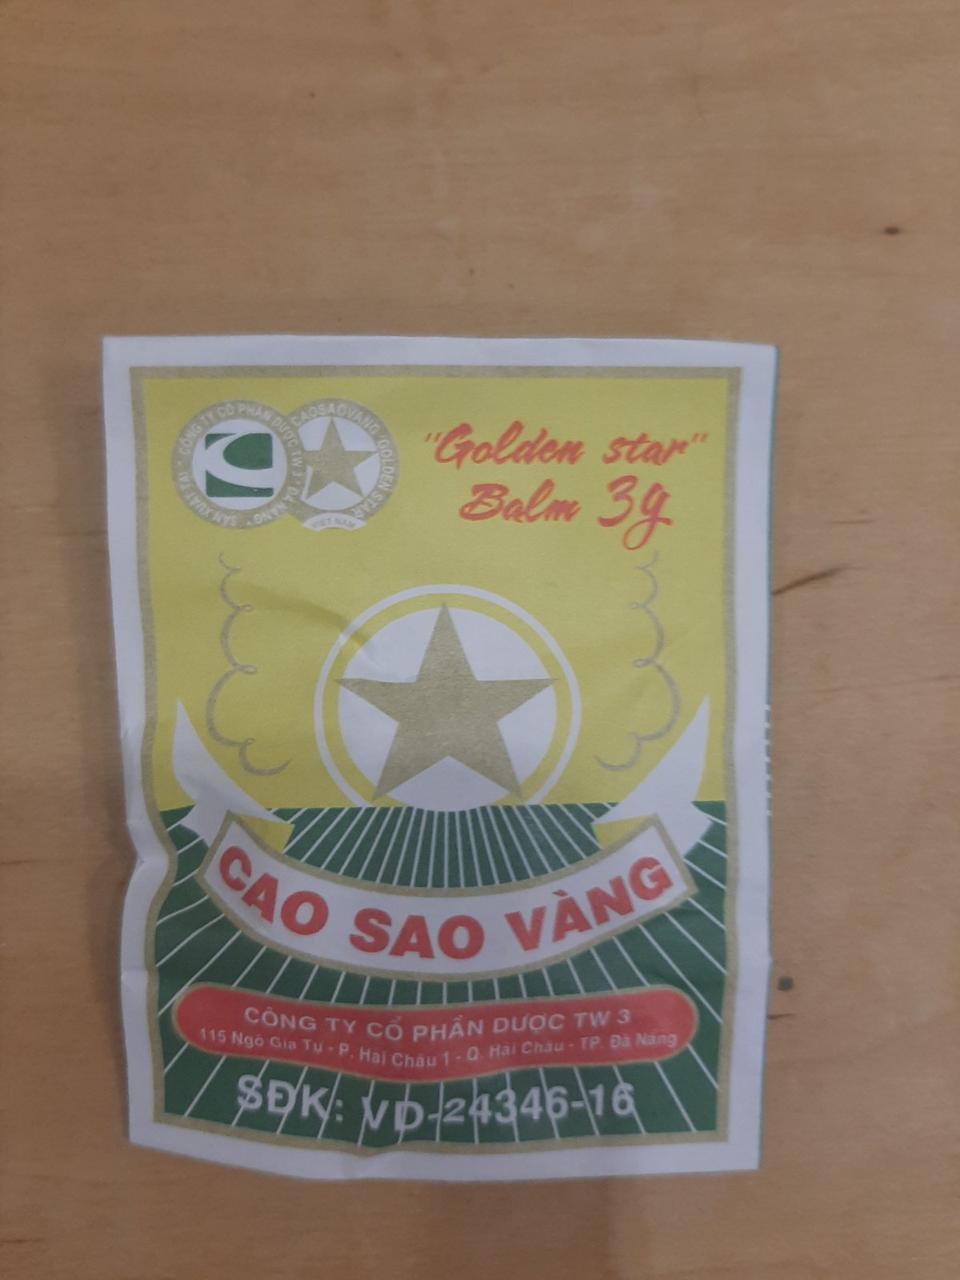 "Зірочка" В'єтнамський бальзам Cao Sao Vang 3 р Жовта